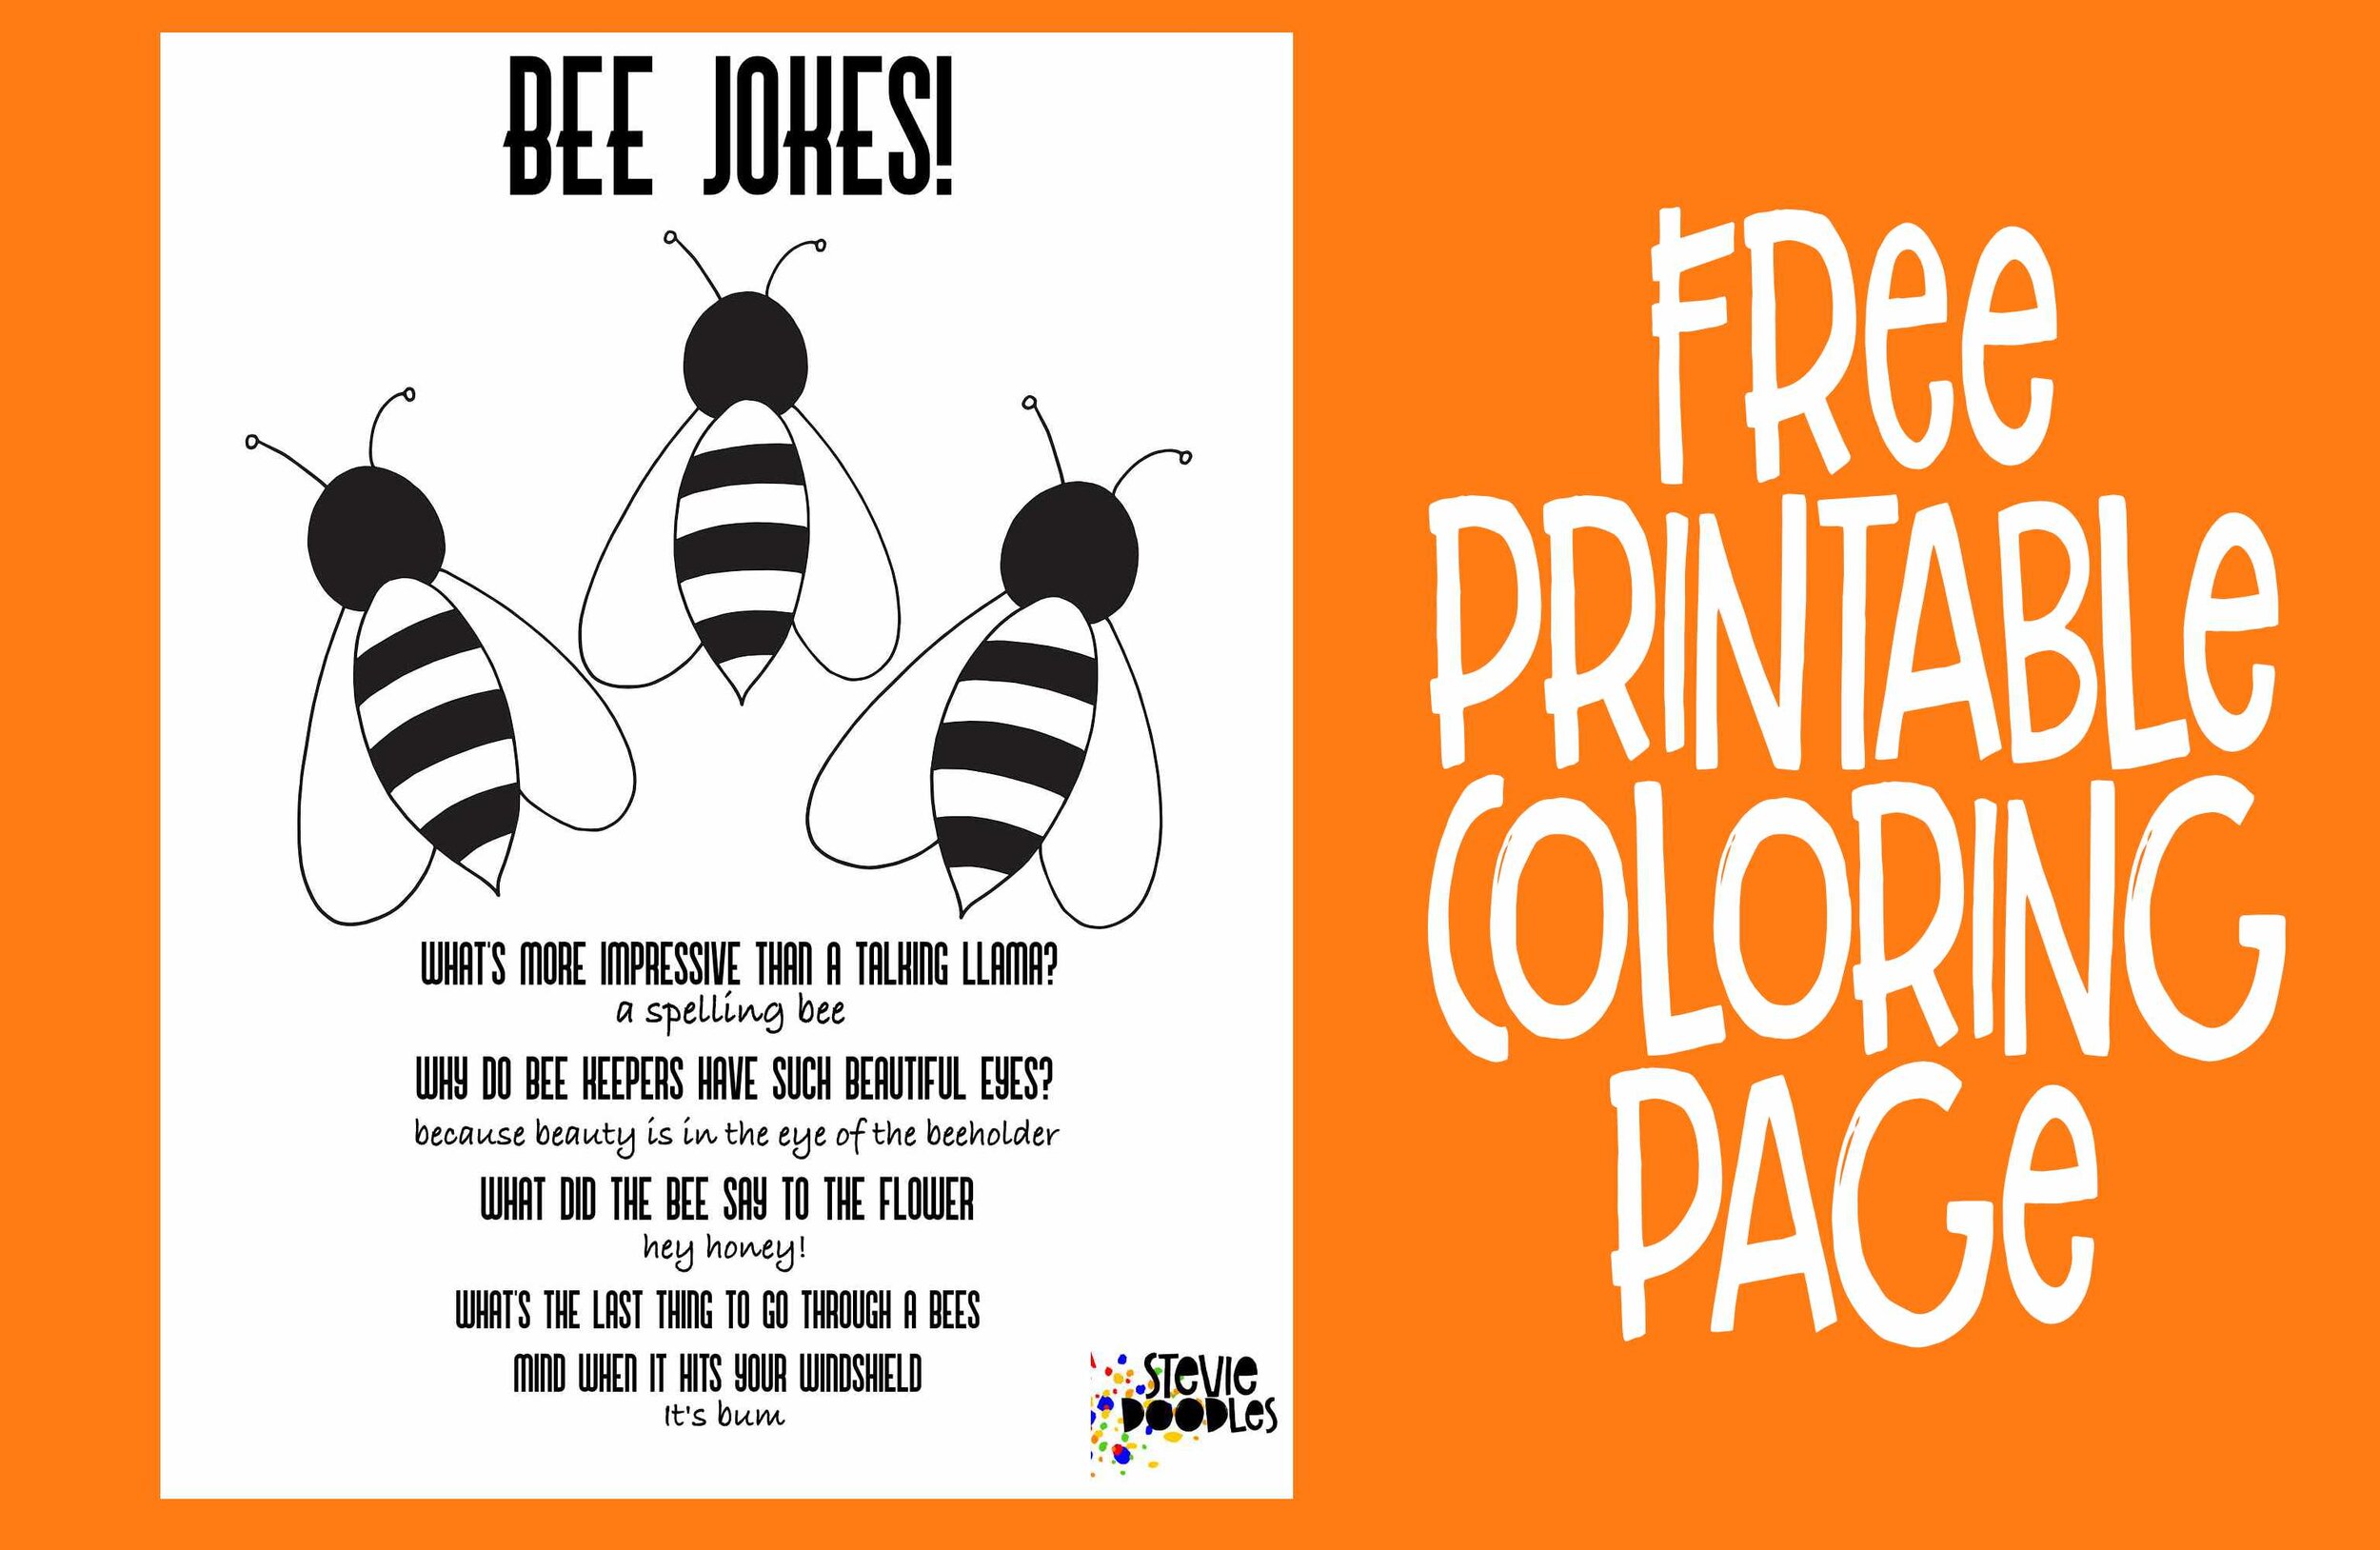 BEE Jokes free printable coloring page